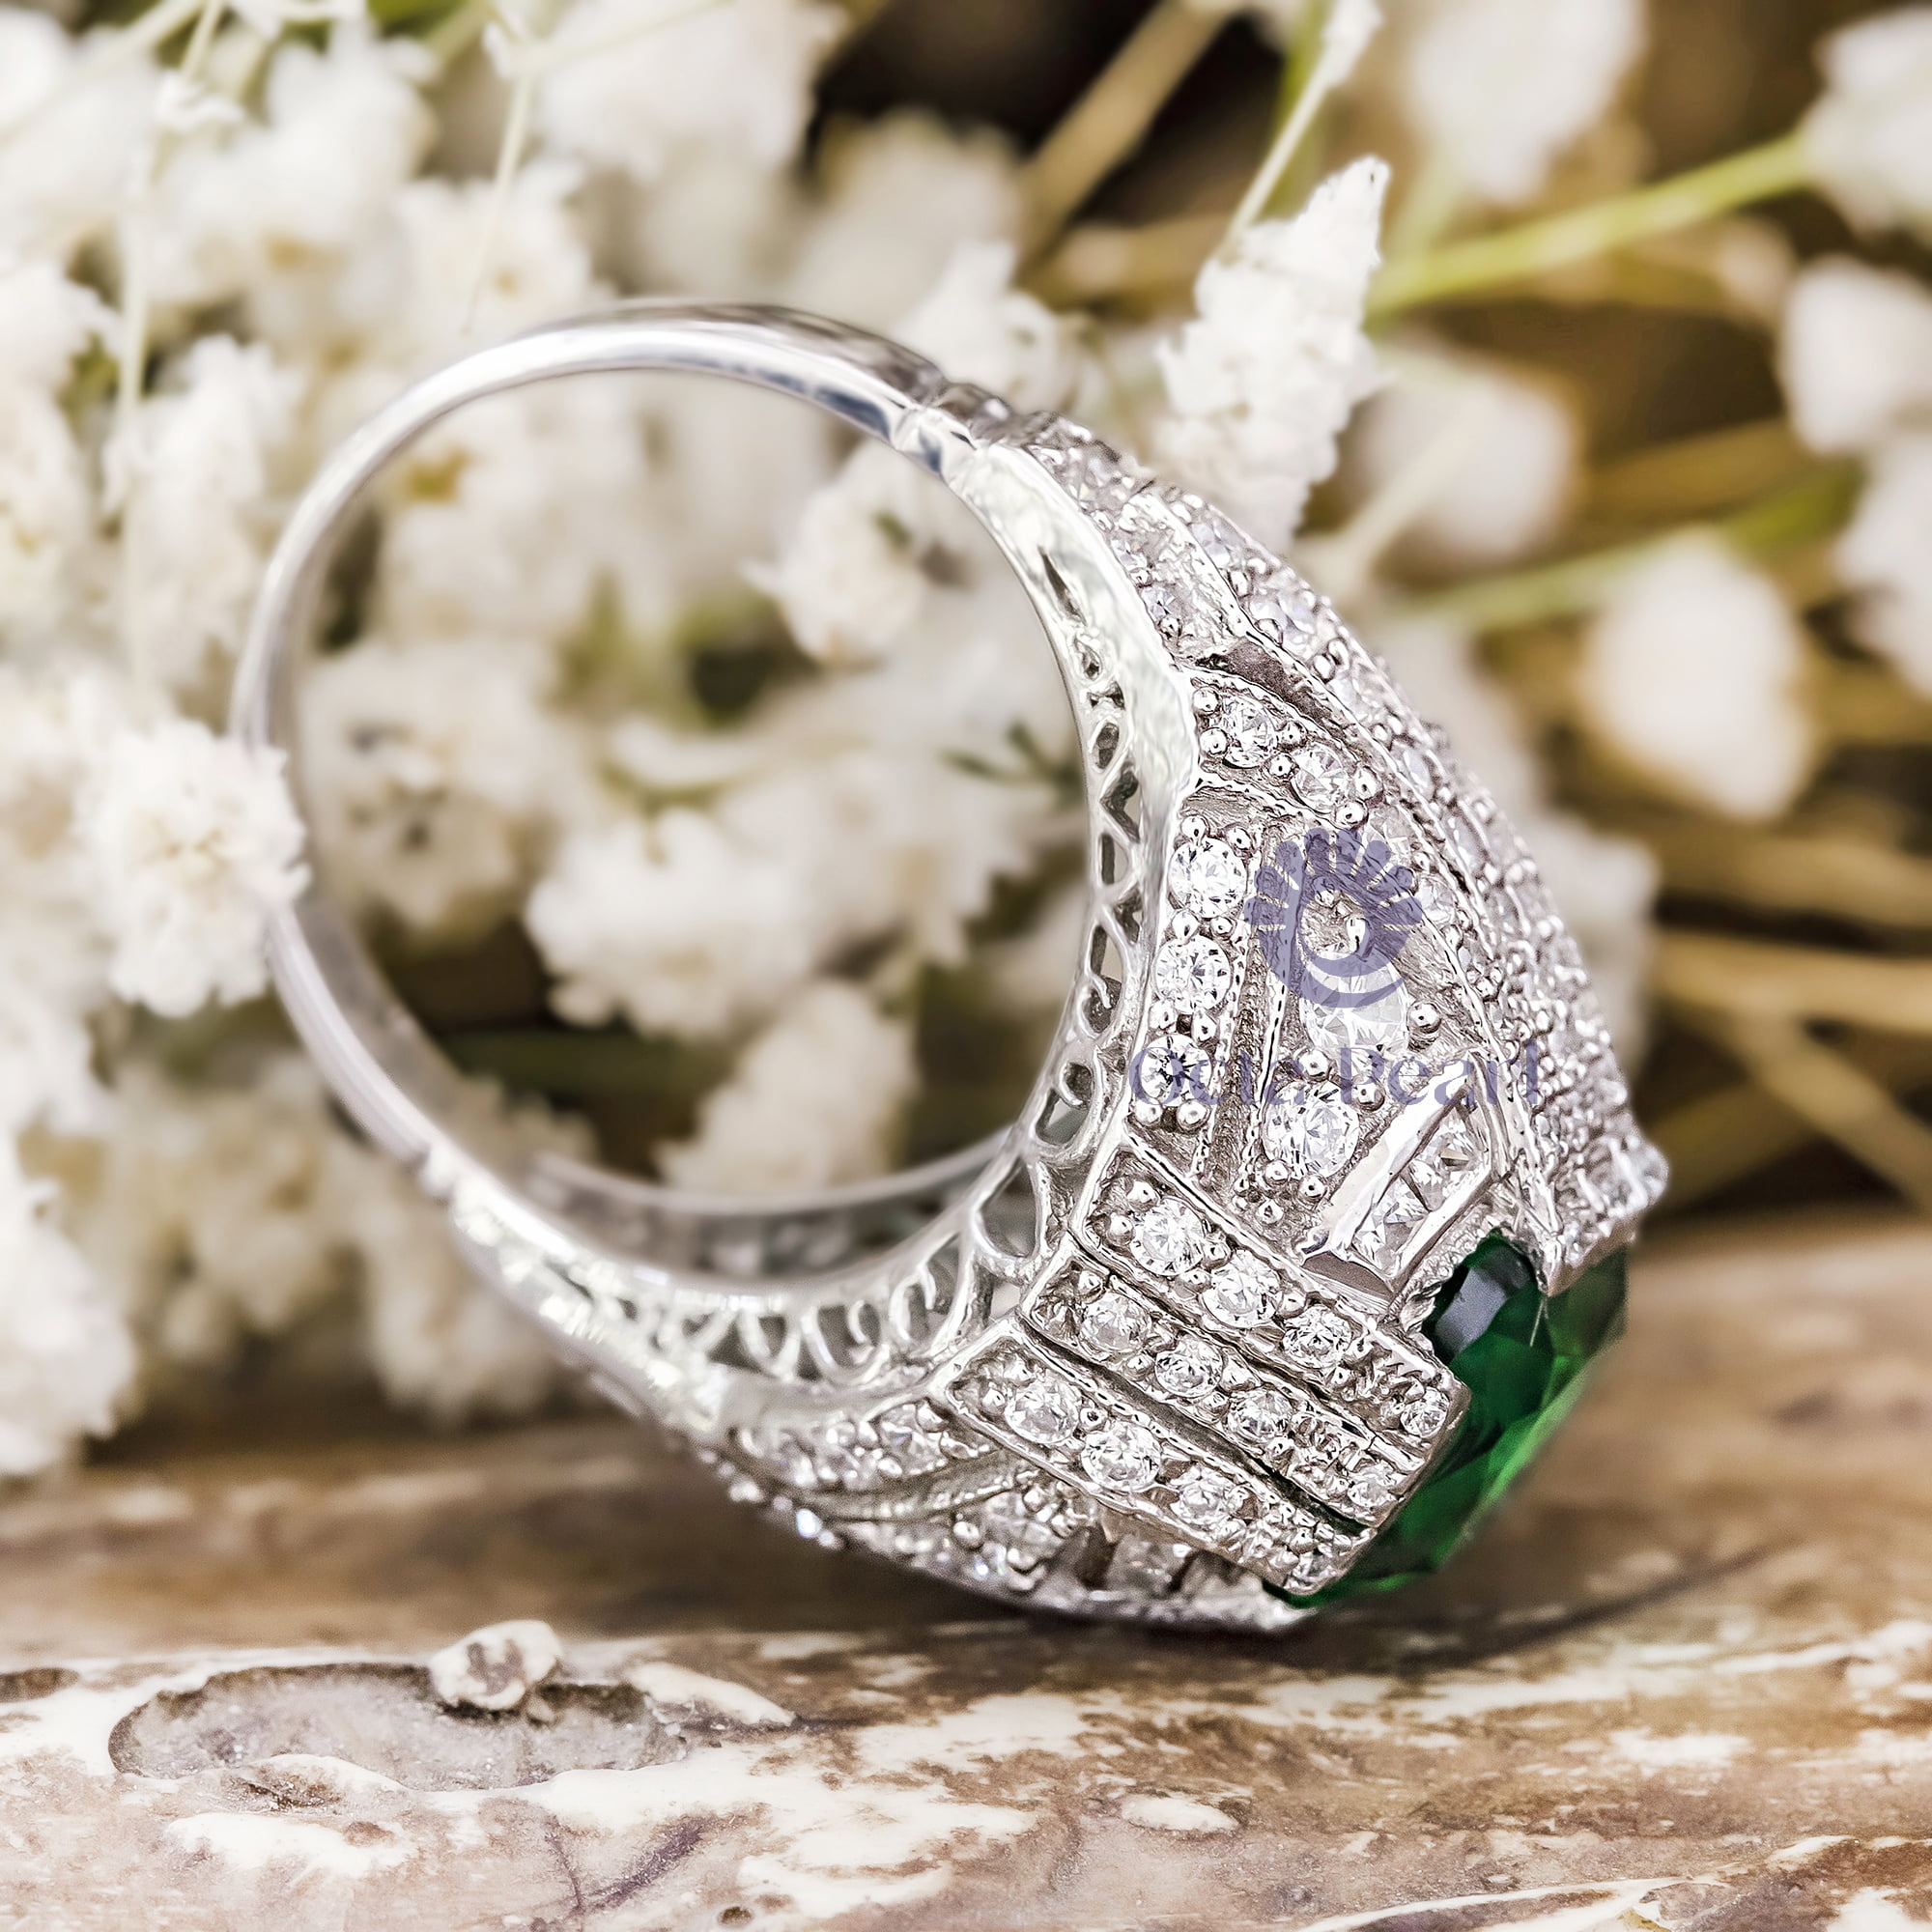 10x9 MM Green Cushion Cut CZ Stone Milgrain Antique Victorian Art Deco Ring For Engagement